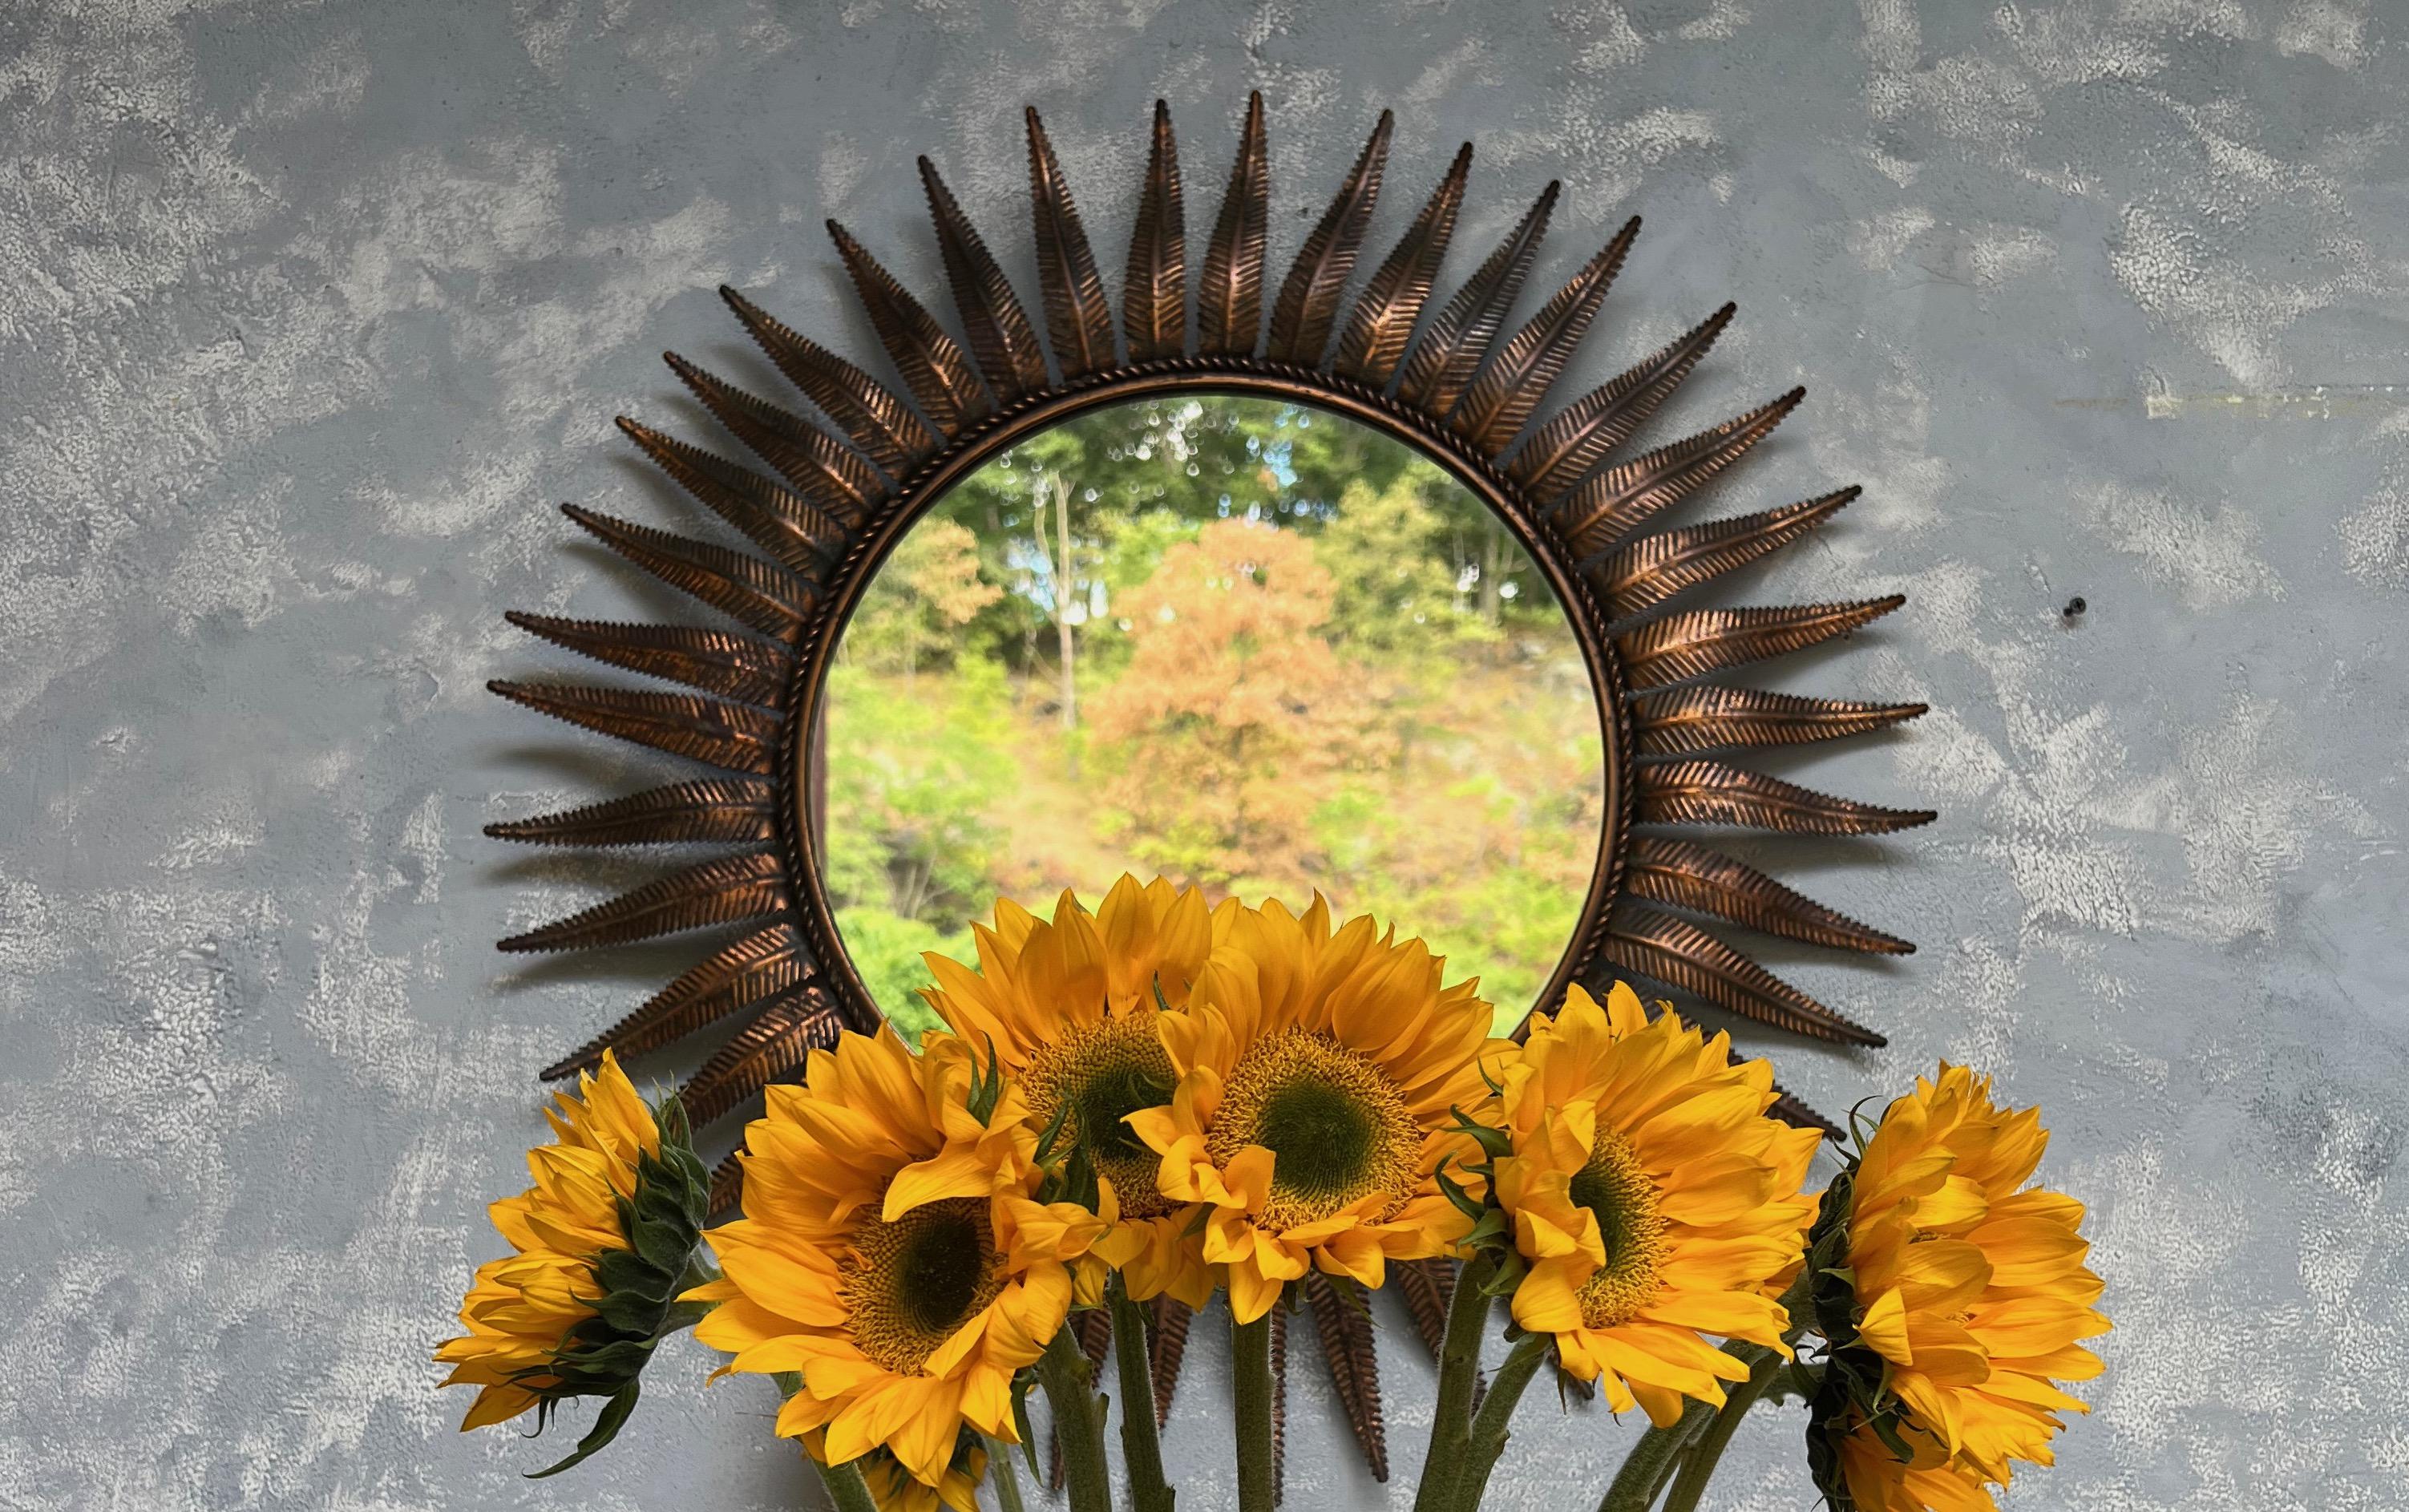 large round sunburst mirror